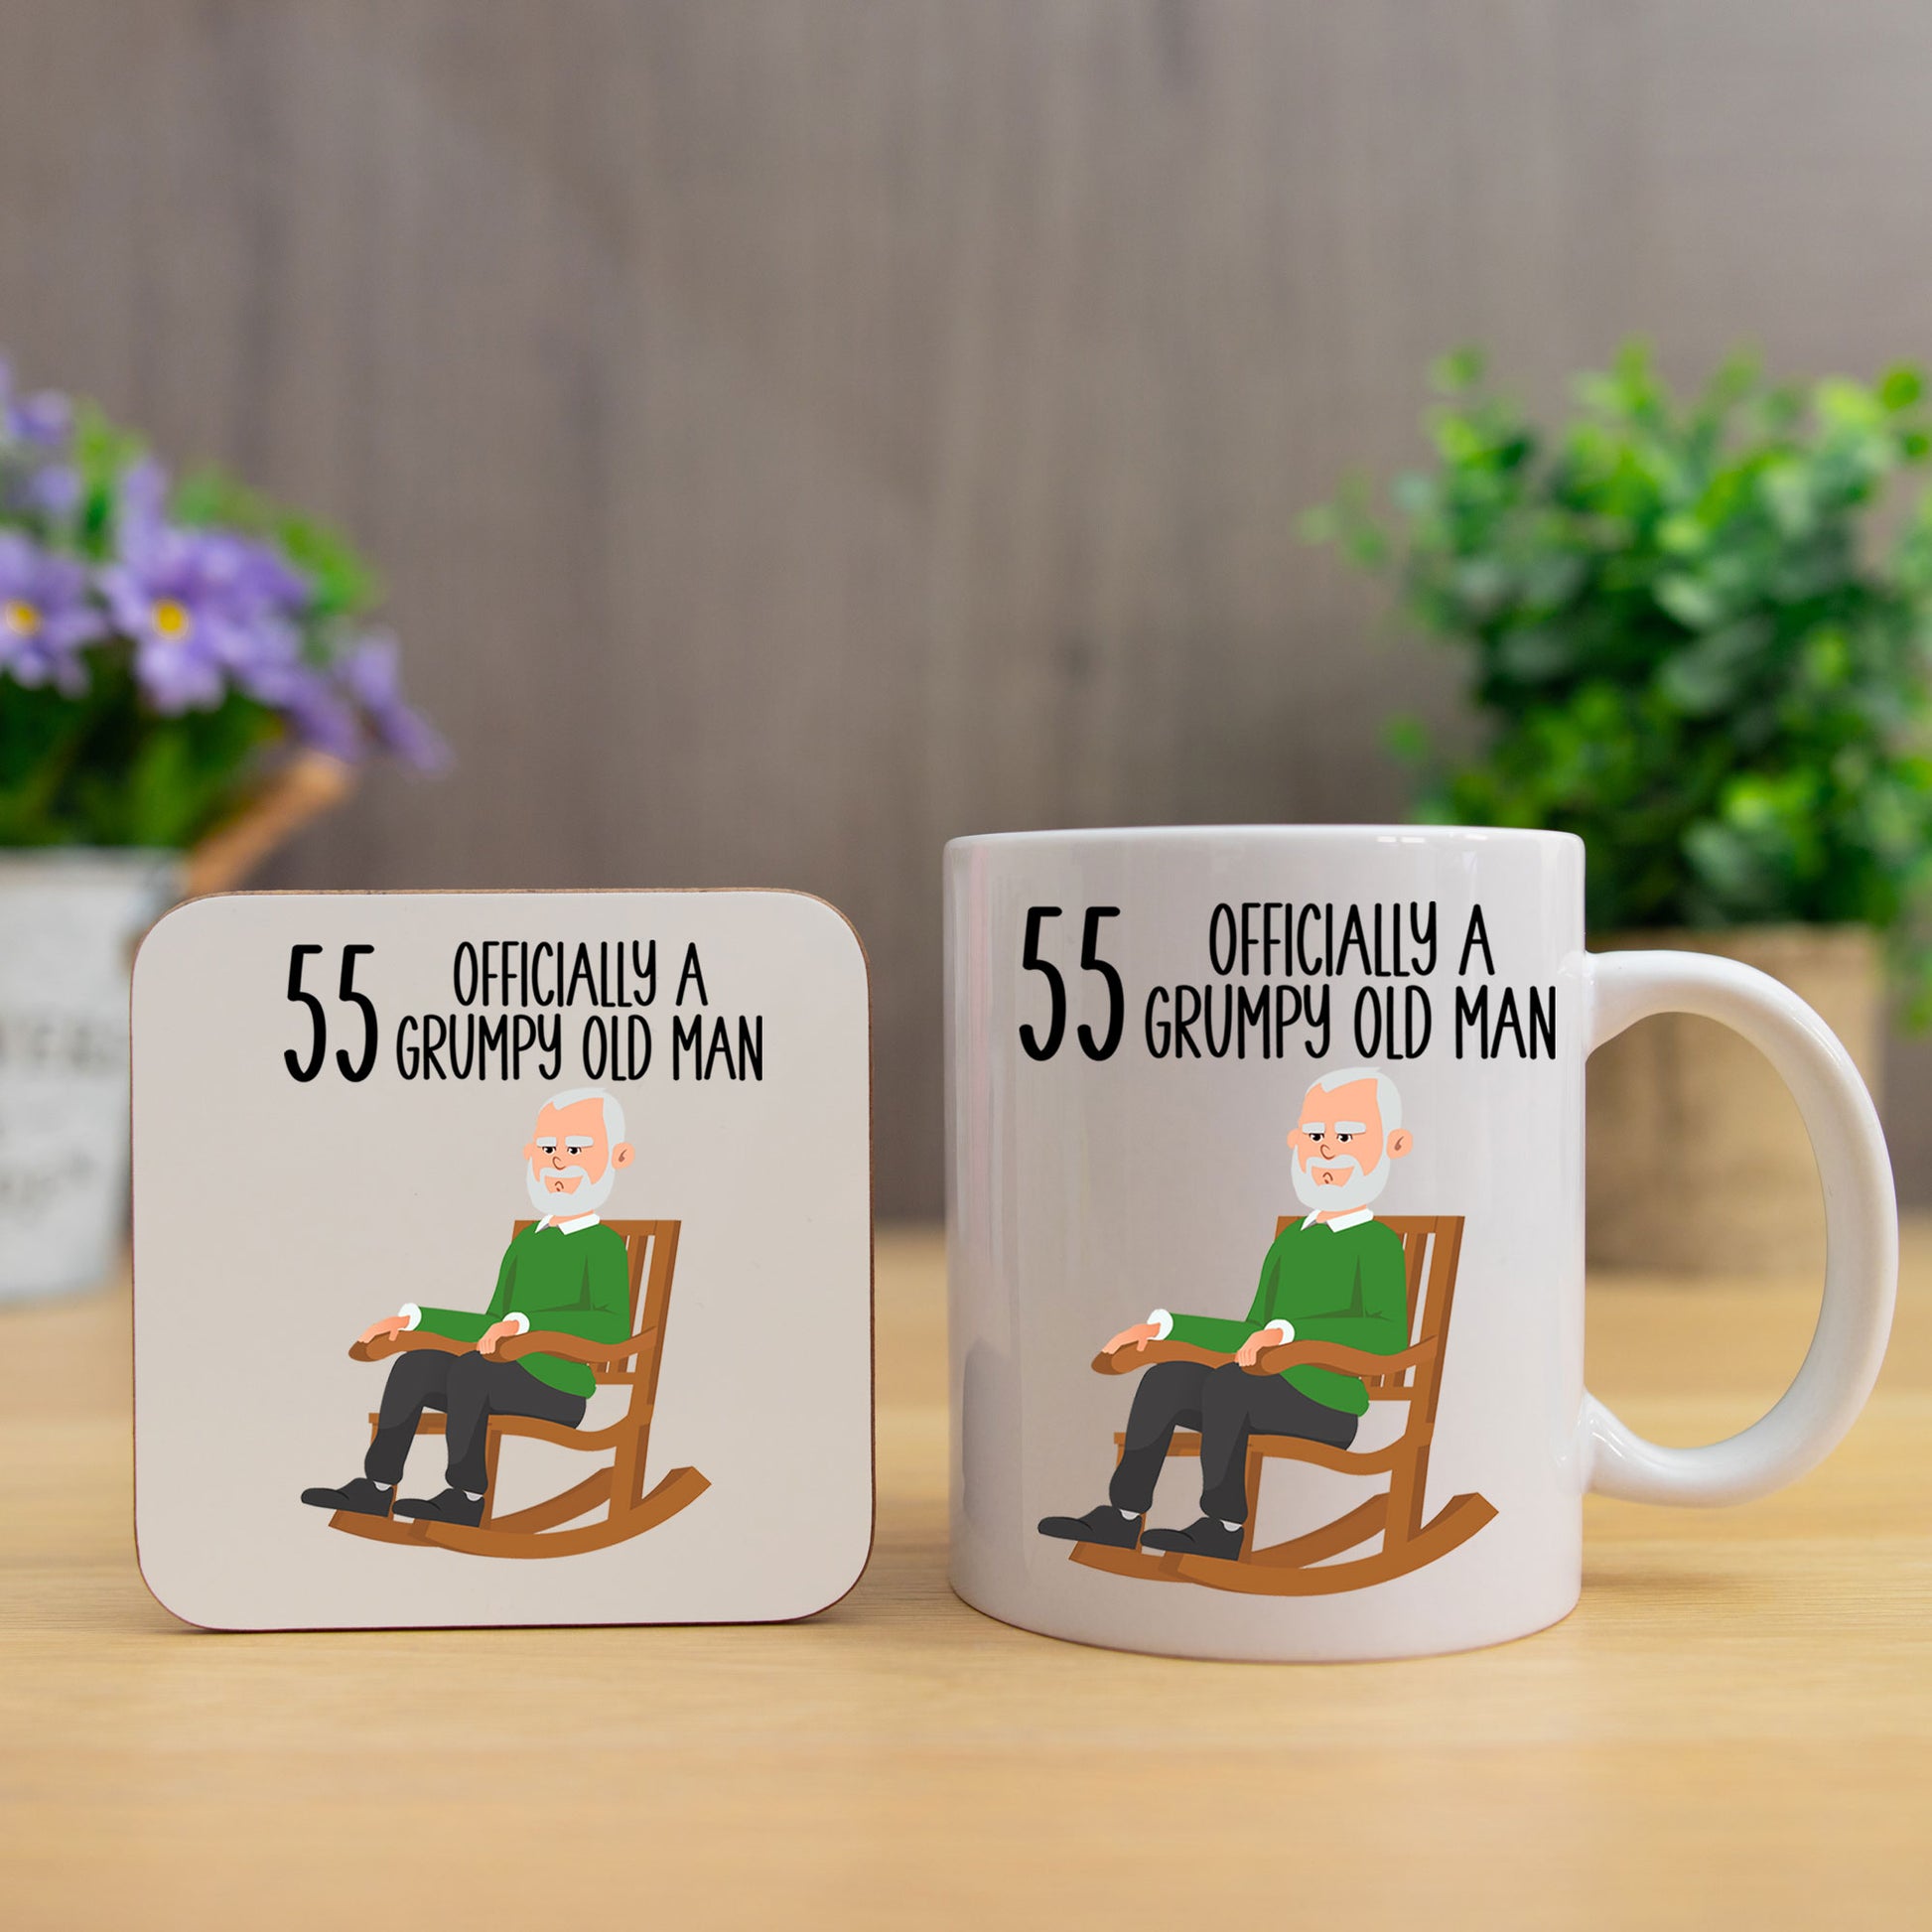 55 Officially A Grumpy Old Man Mug and/or Coaster Gift  - Always Looking Good - Mug & Coaster Set  